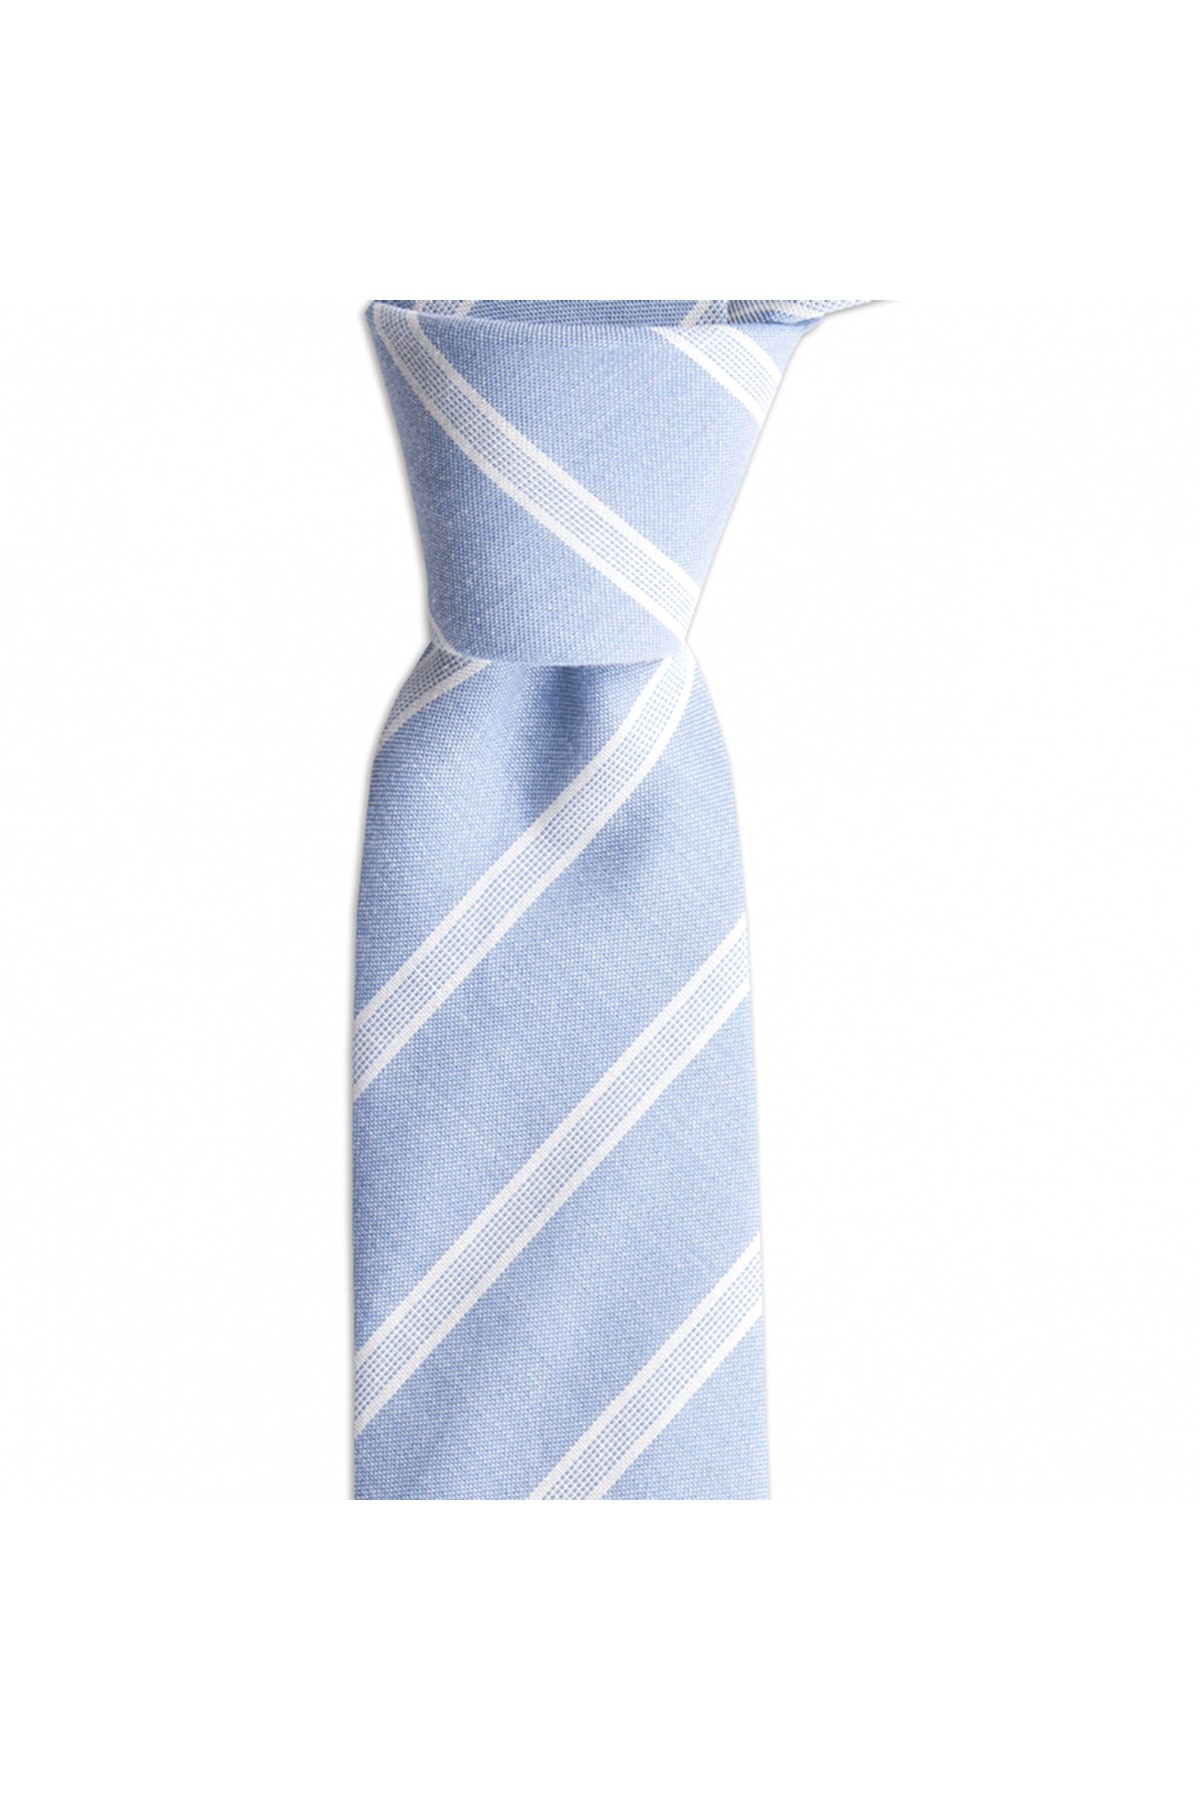 Çizgili 6 cm genişliğinde ince pamuk kravat